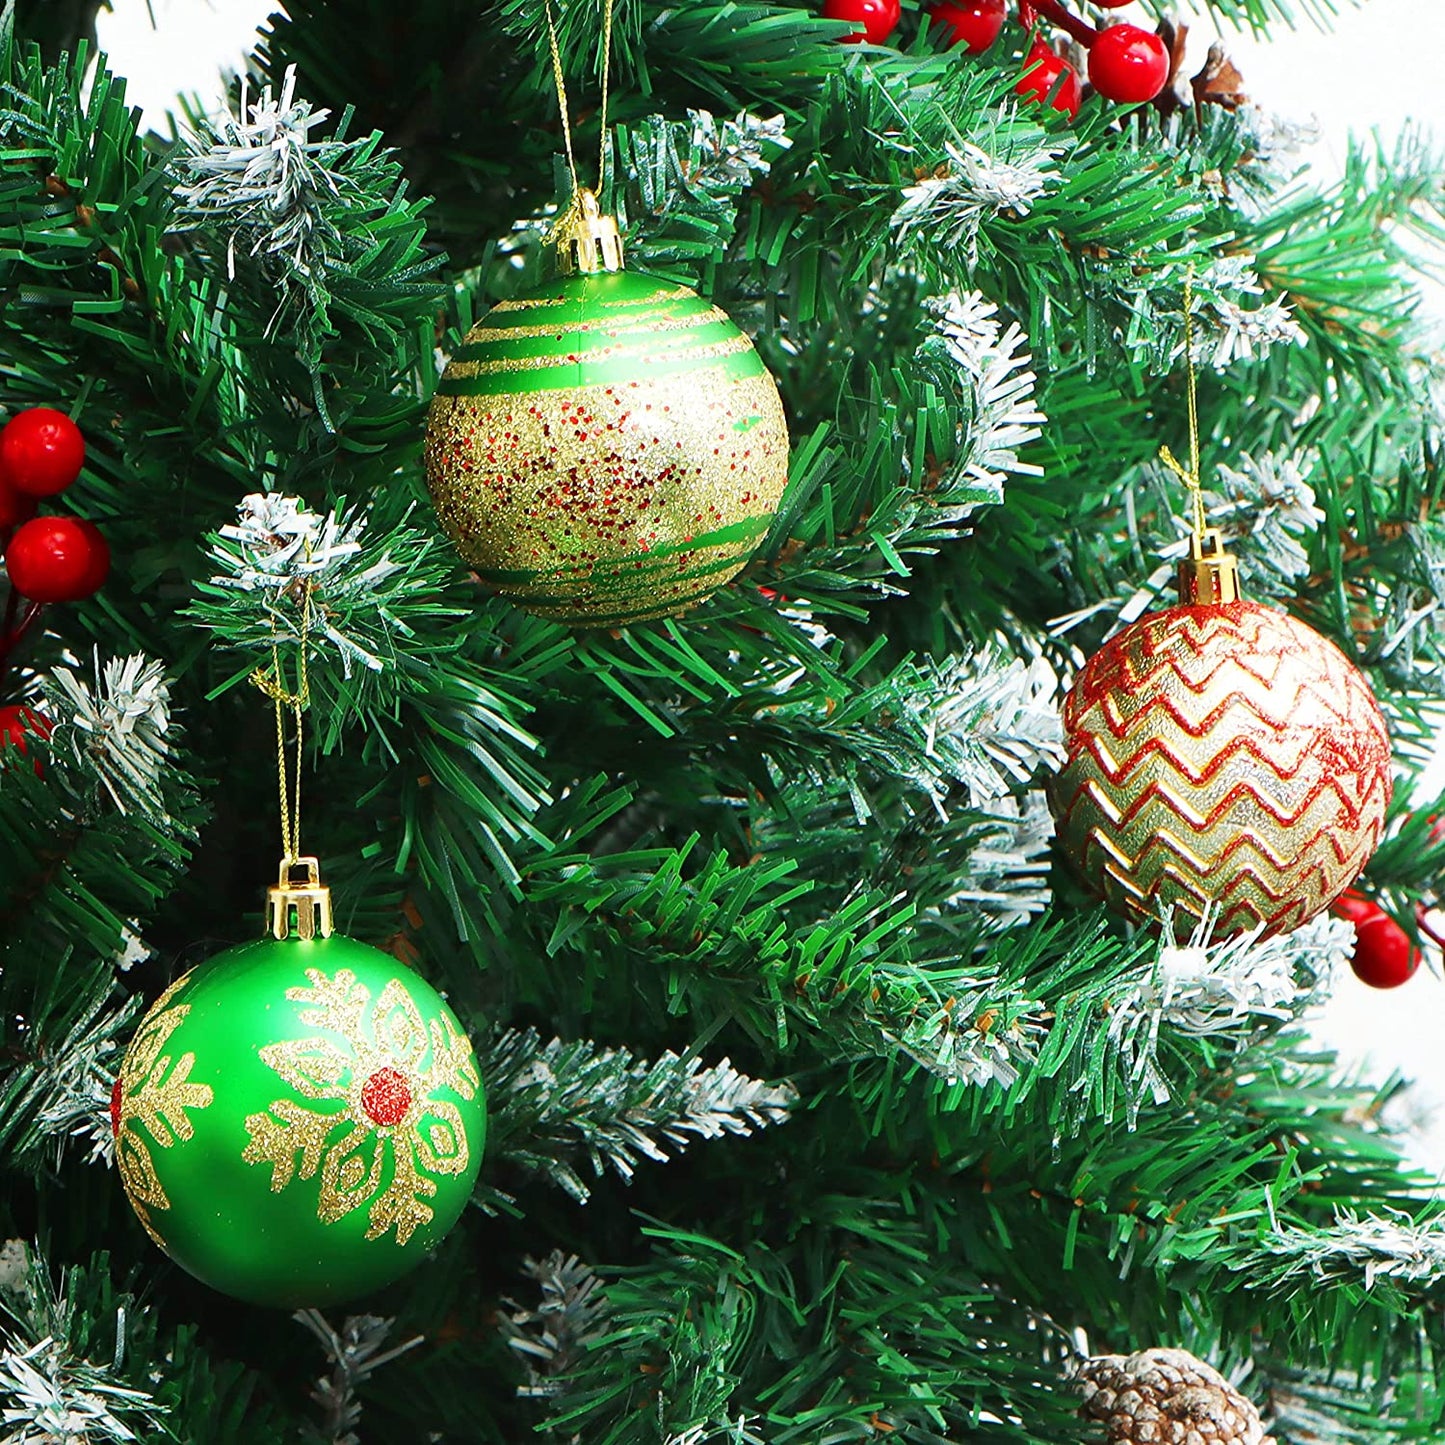 24 Pcs Christmas Ball Glitter Ornaments Set